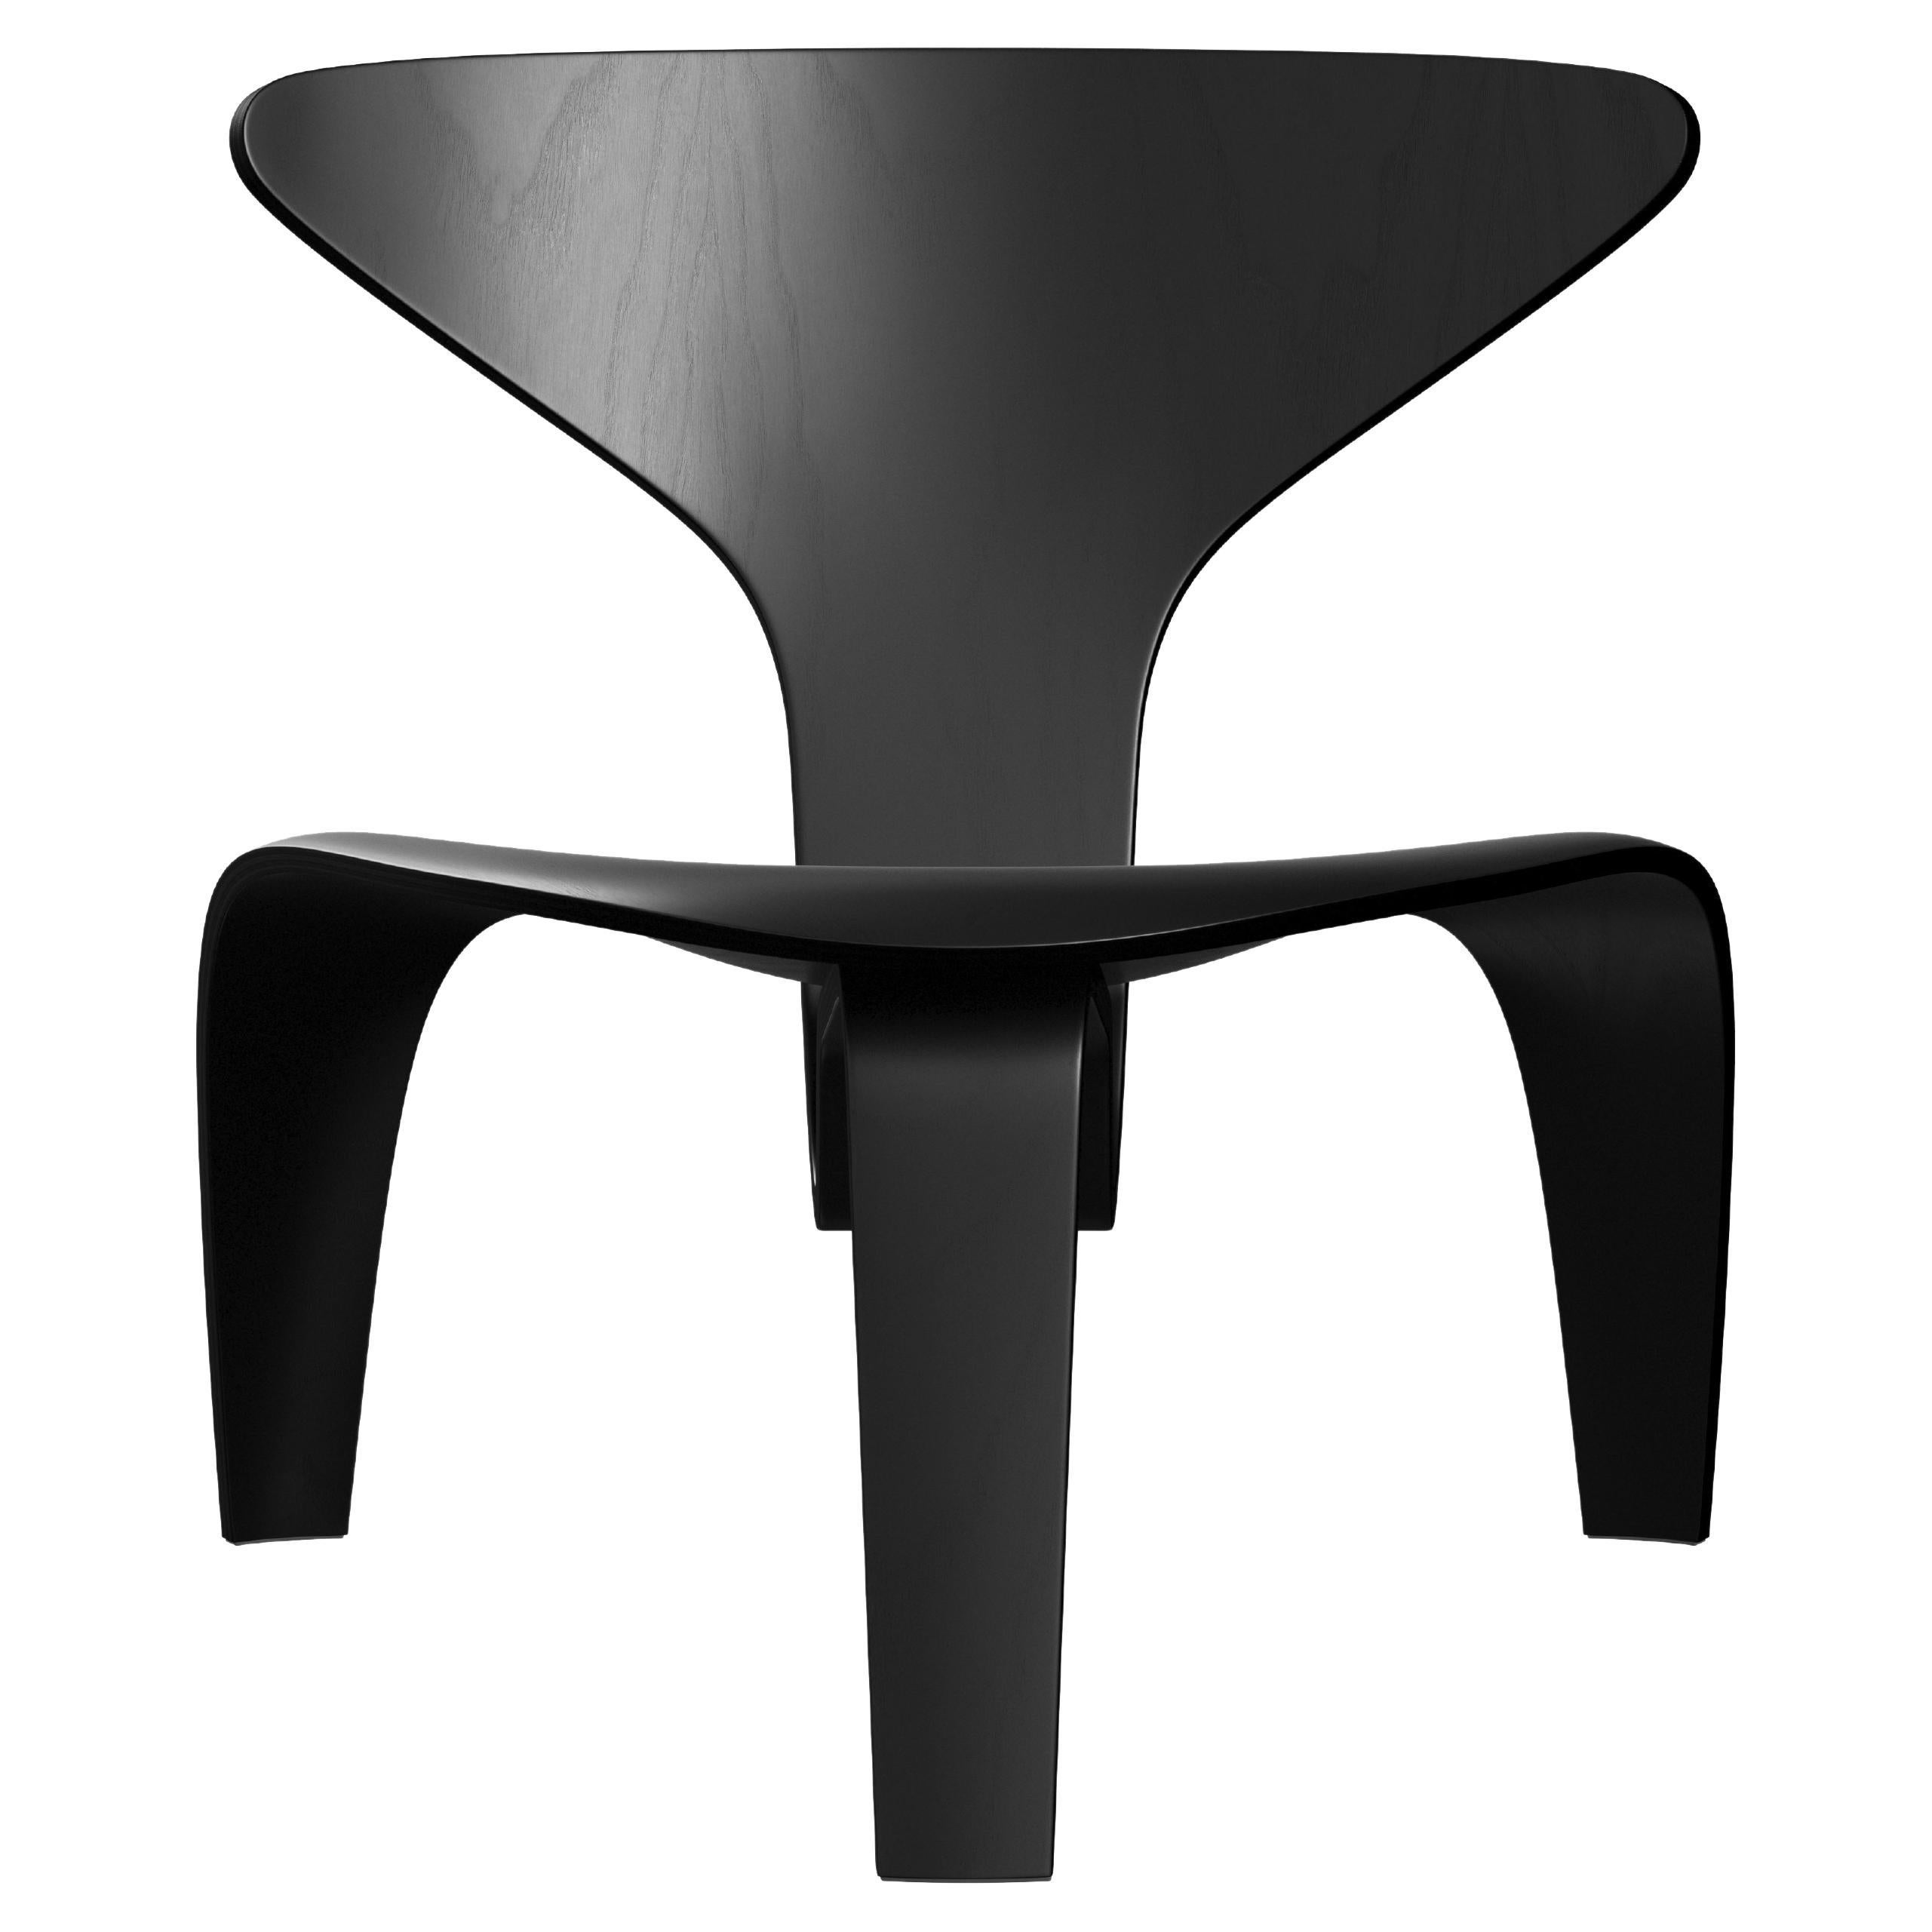 Poul Kjærholm 'PK0 A' Chair for Fritz Hansen in Black Colored Ash For Sale